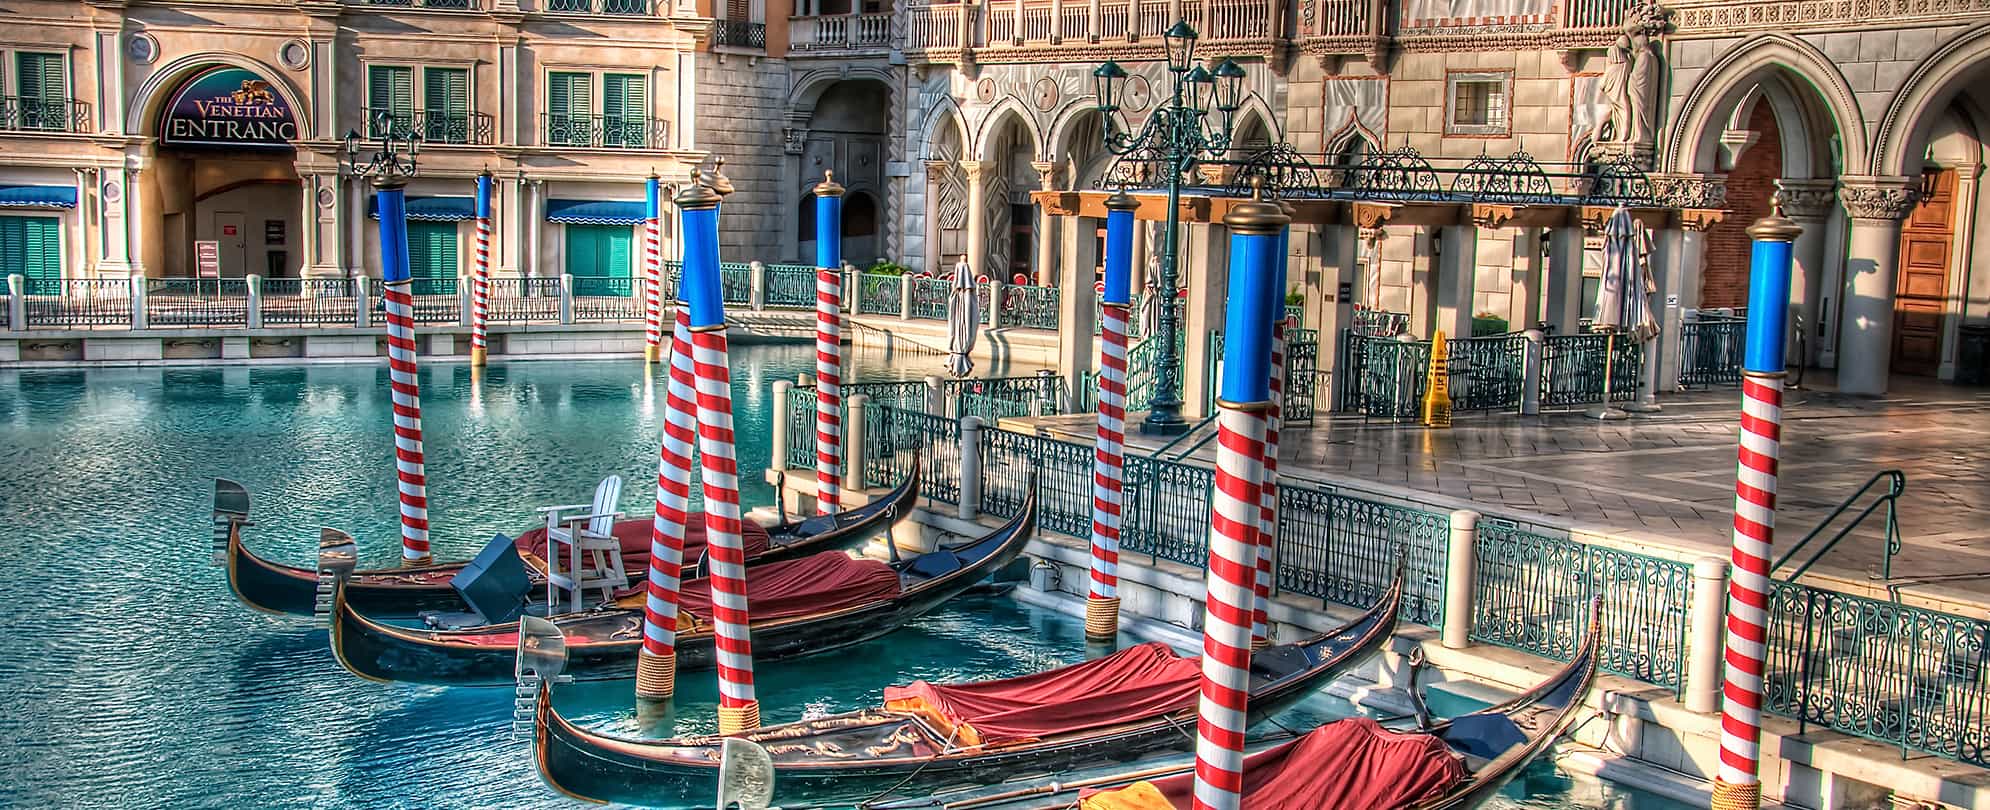 Gondola boats on a pool at the Venetian resort in Las Vegas, Nevada.